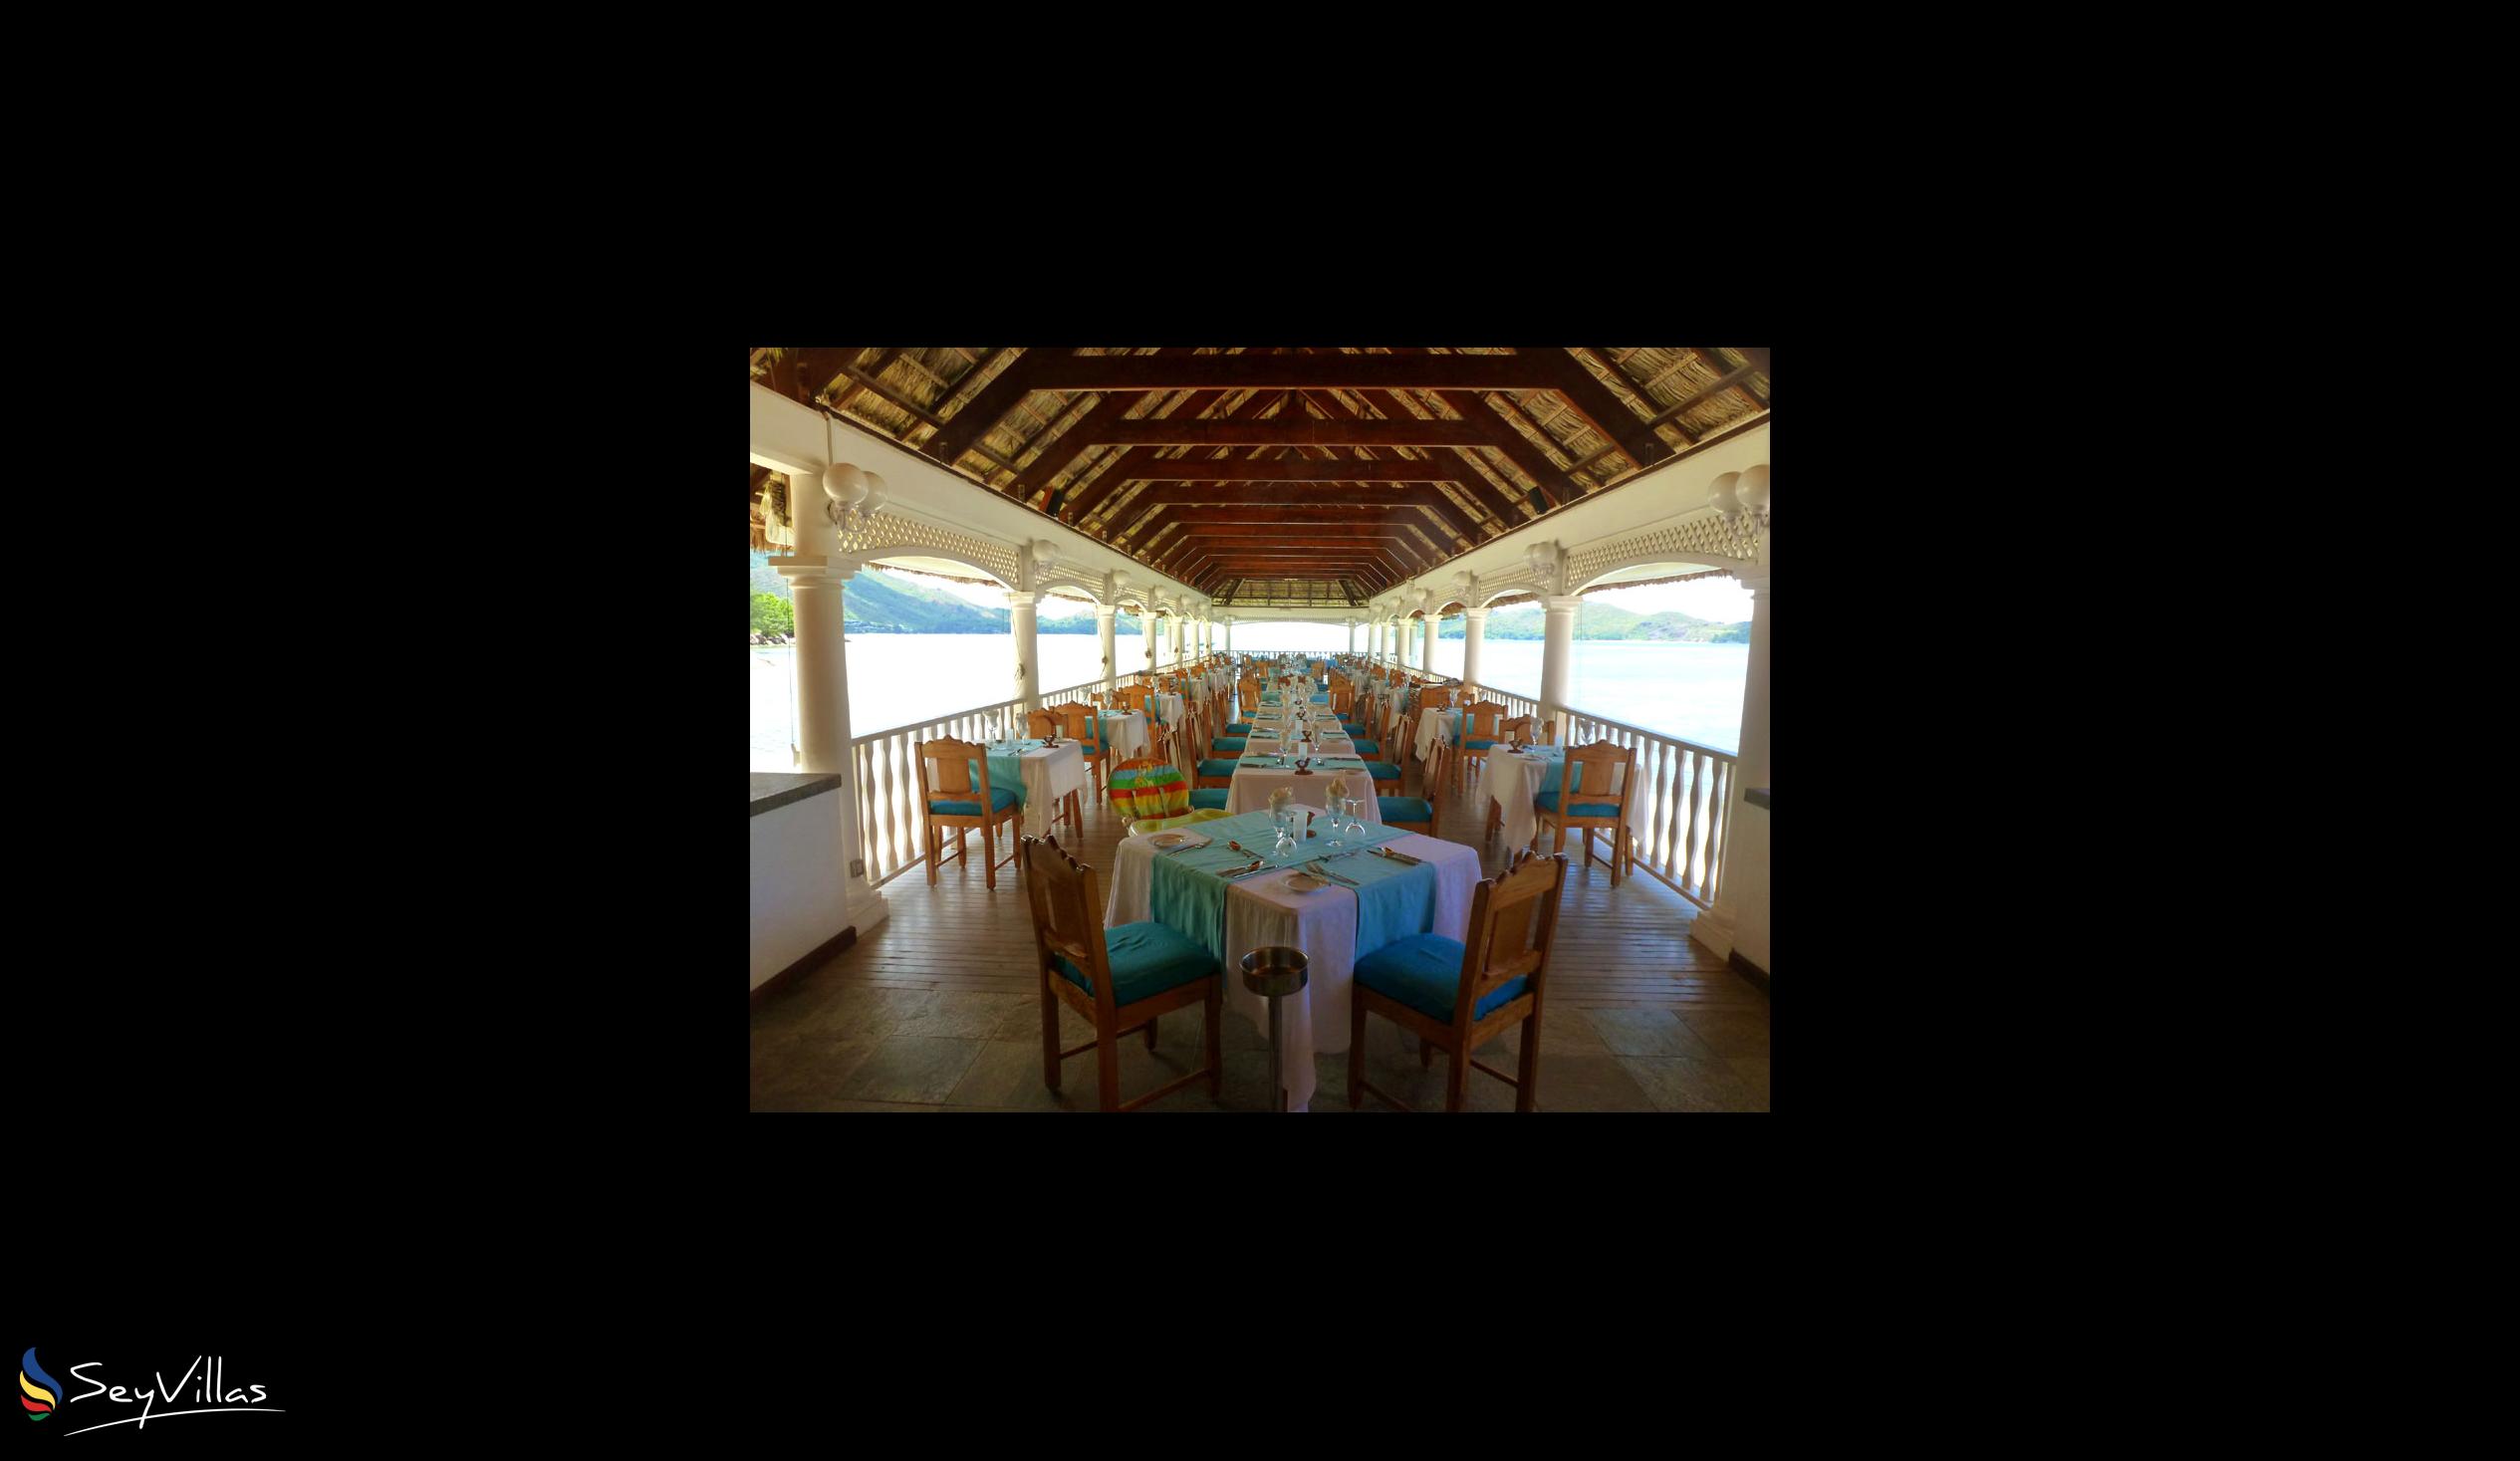 Photo 27: Le Domaine de La Reserve - Indoor area - Praslin (Seychelles)